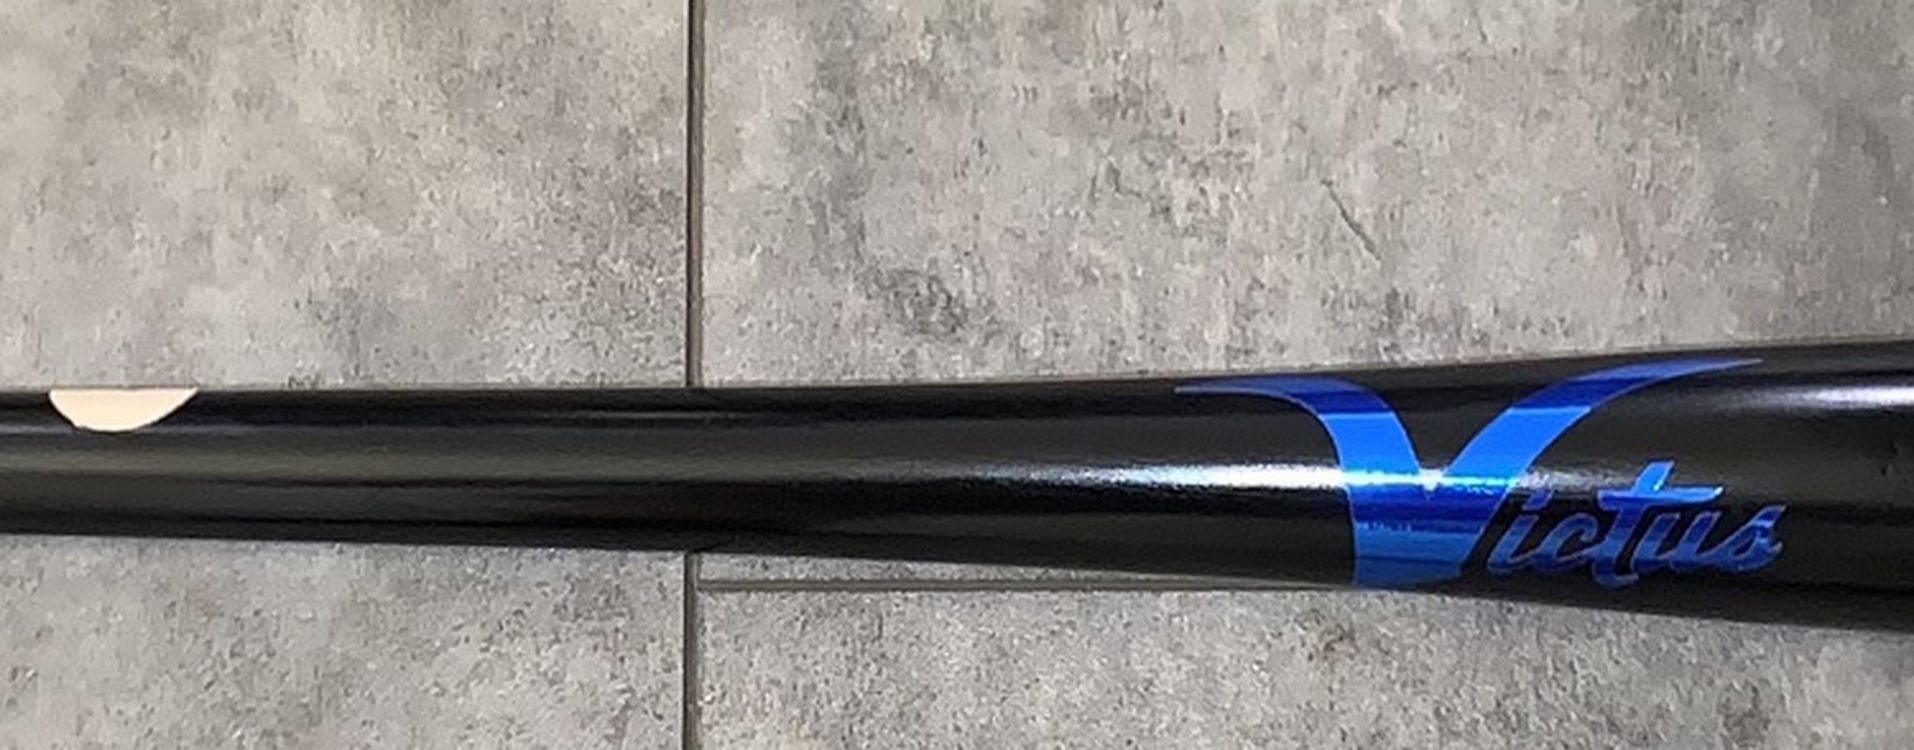 New 32” Victus Maple Wood Bat (-3) Black/Blue